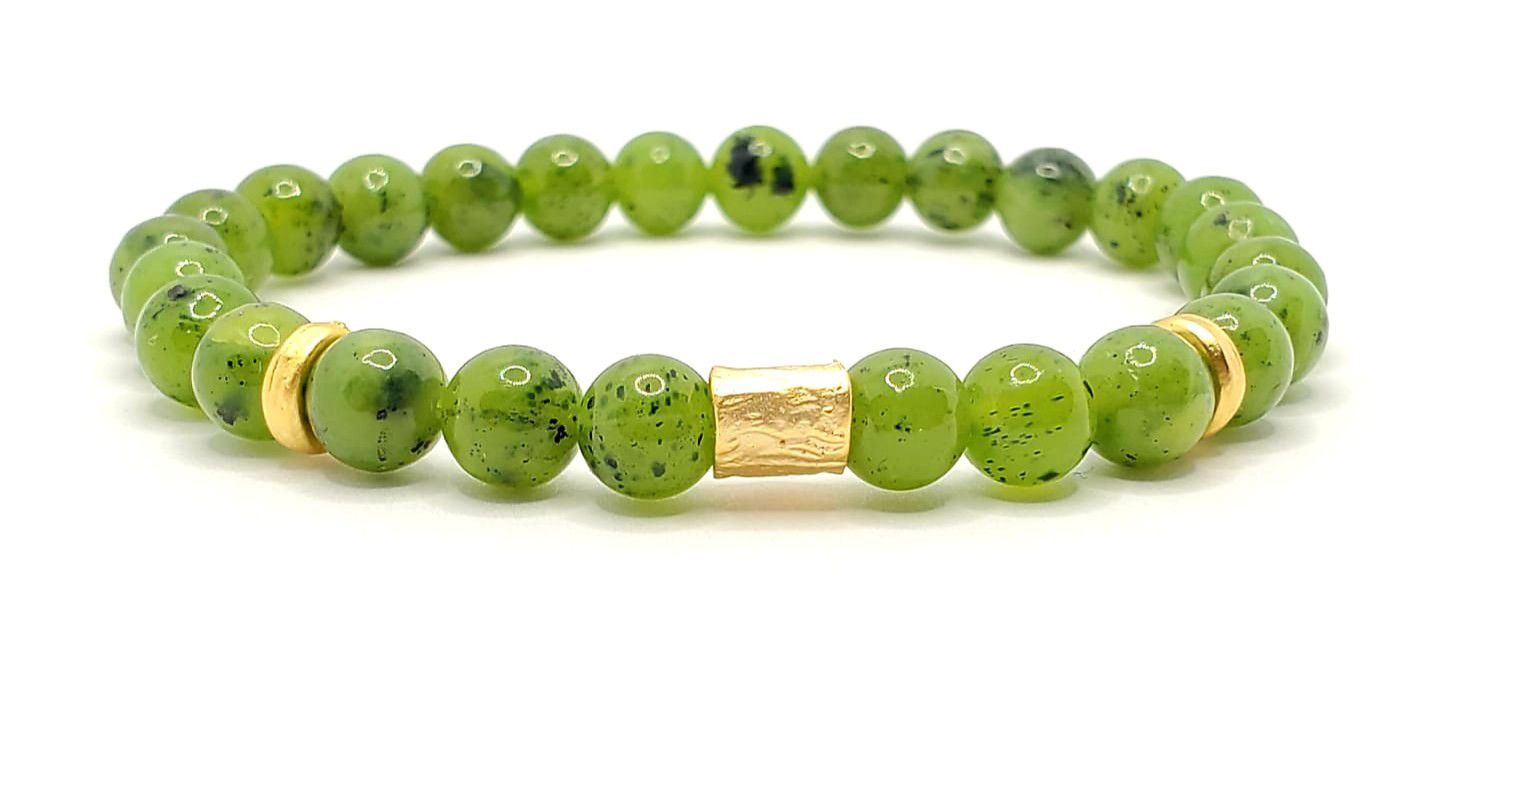 Genuine jade nephrite bracelet for health and good luck